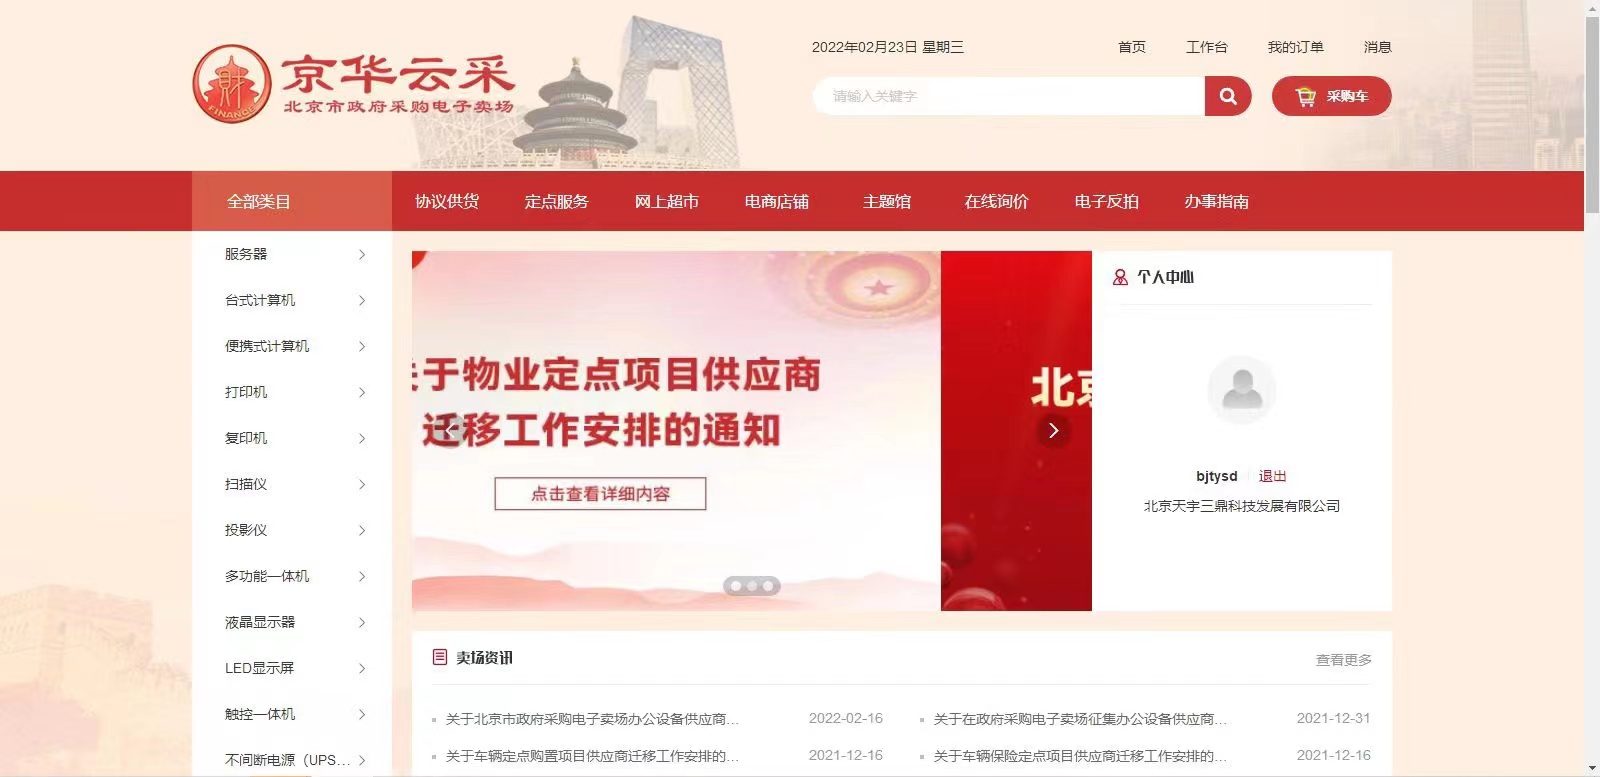 <b>【喜讯】天宇三鼎科技正式入驻北京市政府采购平台</b>